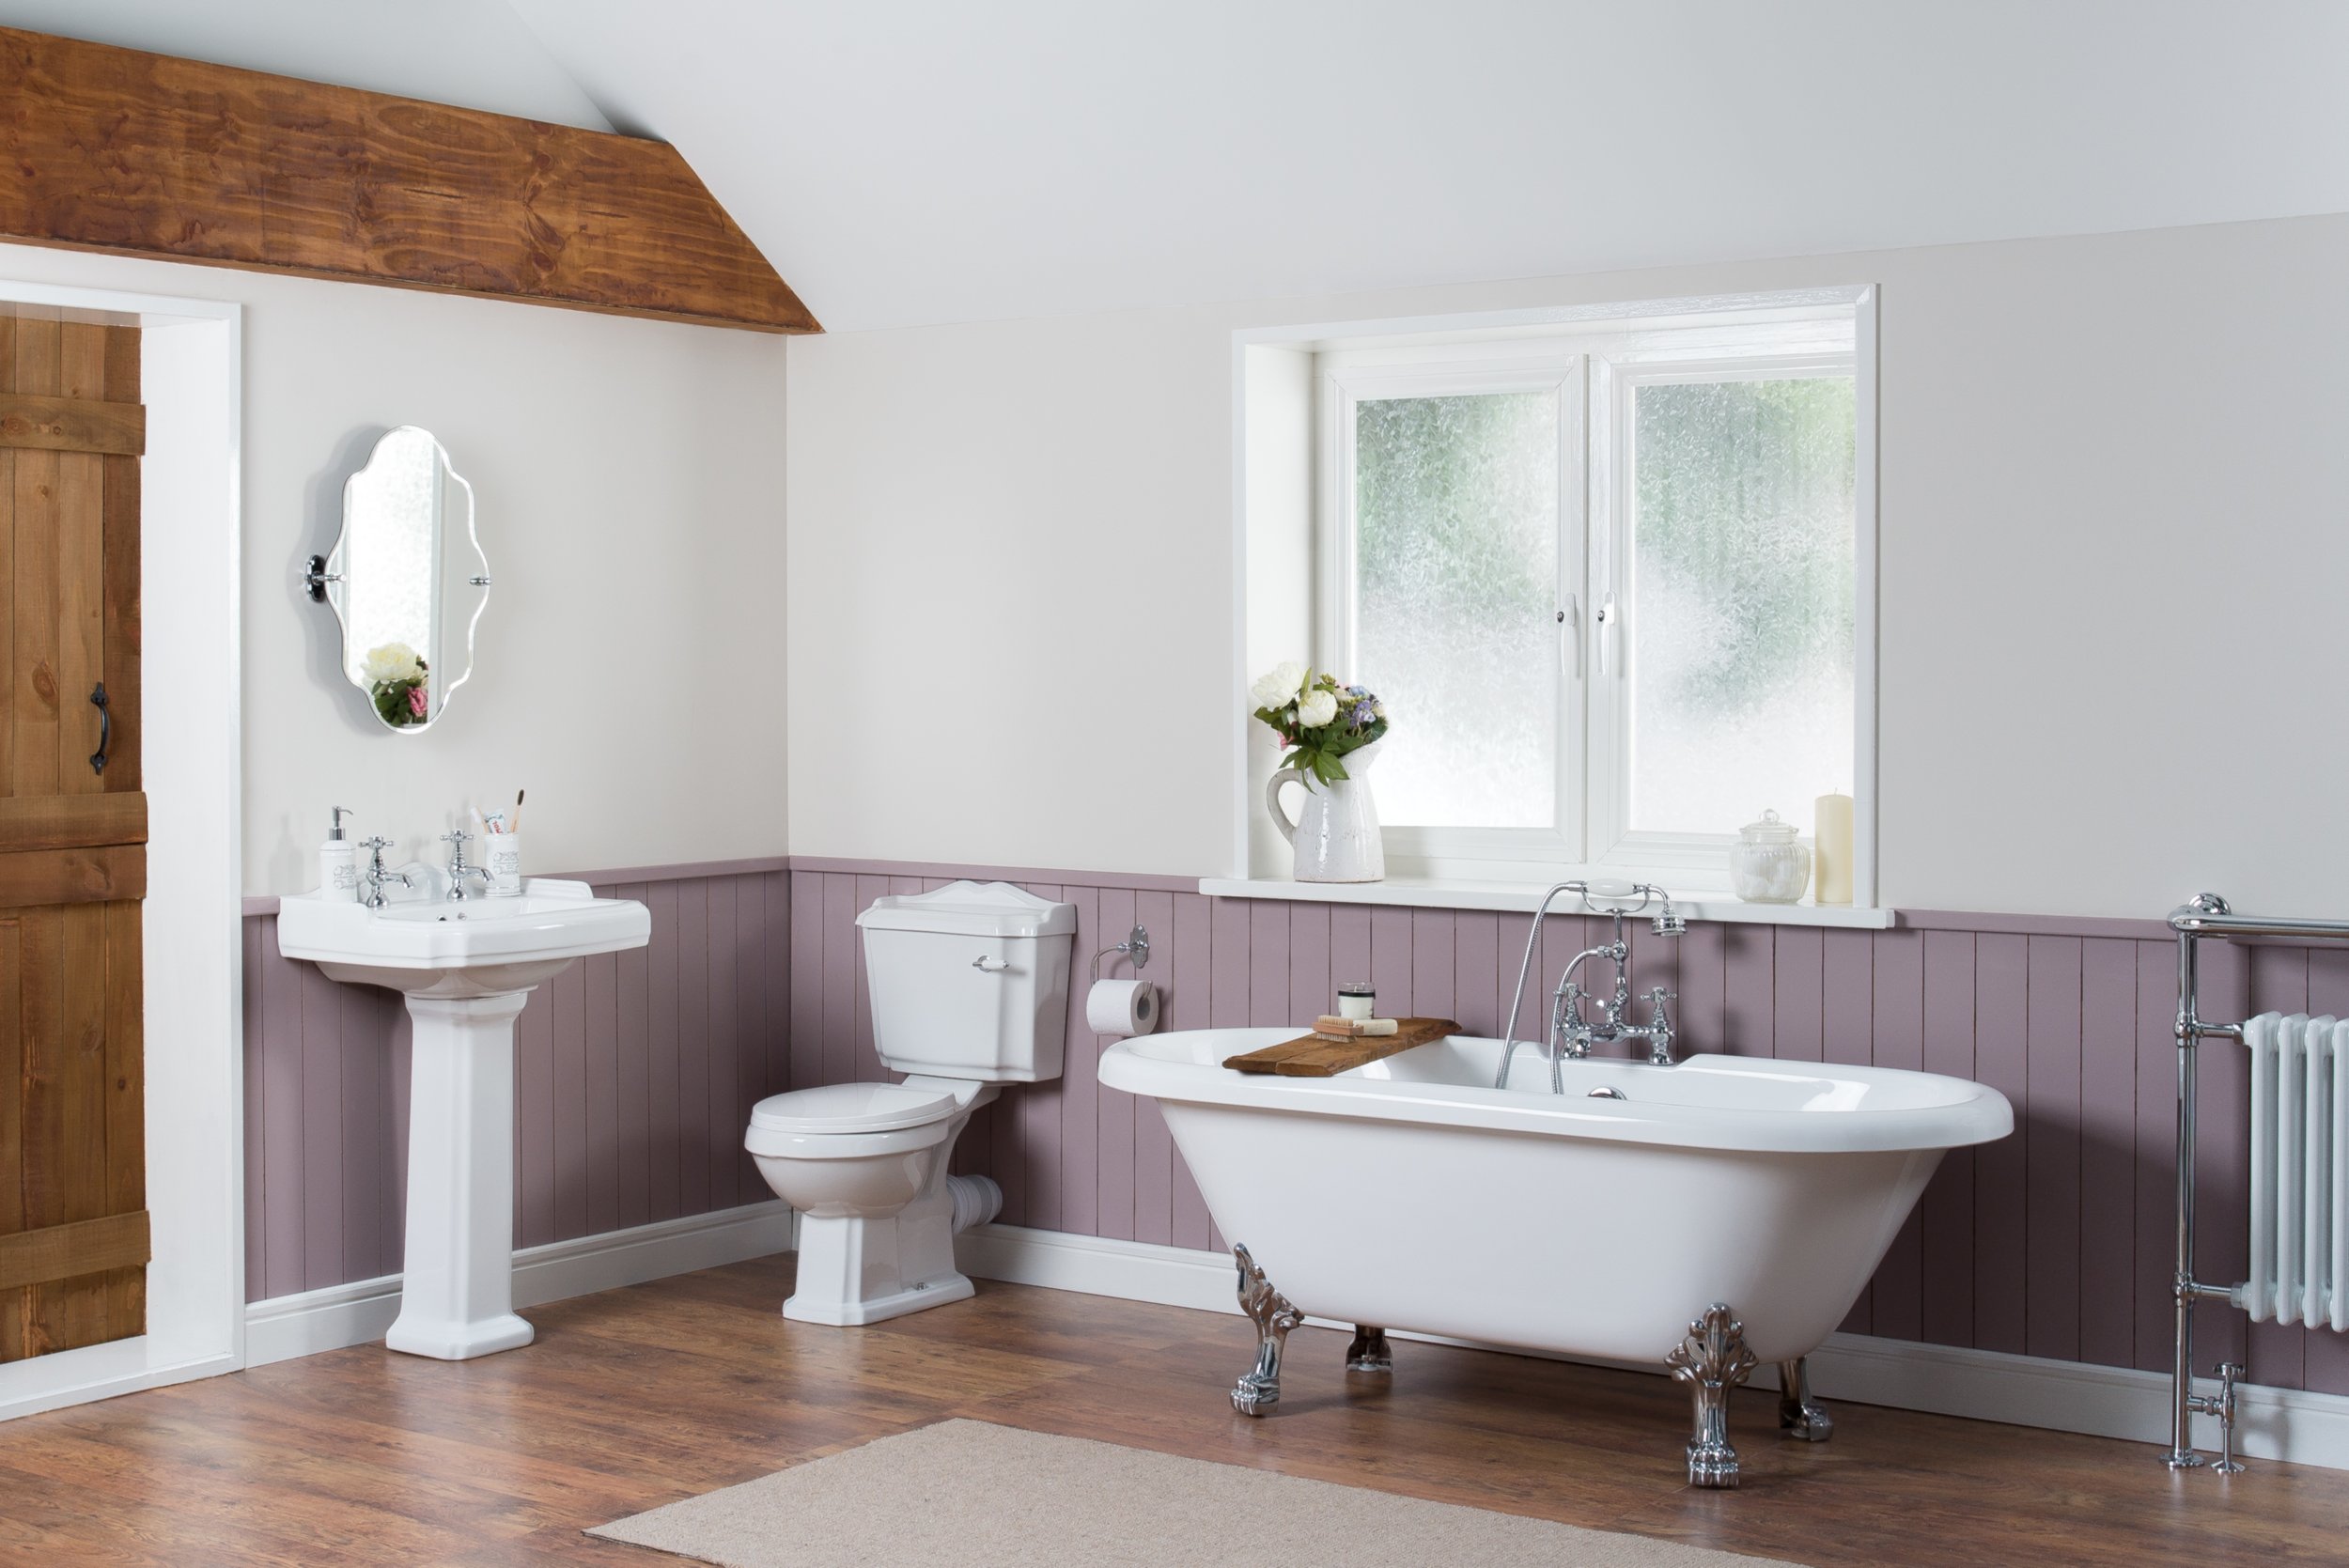 elegant-bathroom-interior-with-luxury-vintage-bathtub-pedestal-sink-with-mirror-toilet.jpg